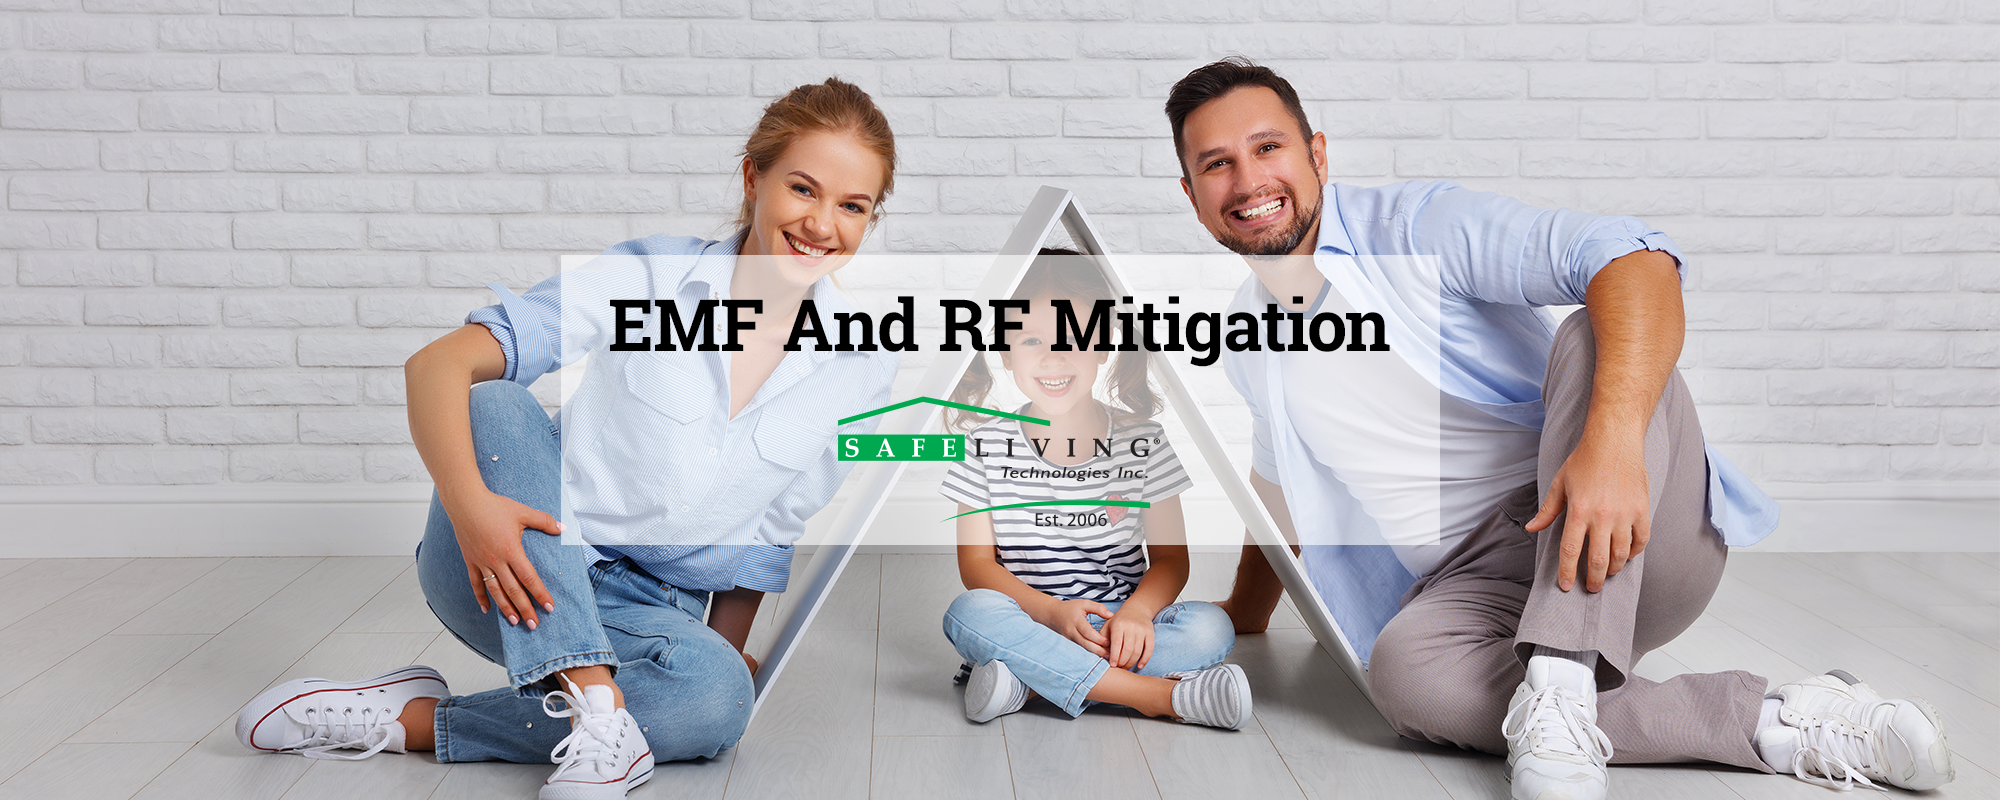 EMF Mitigation and RF Mitigation